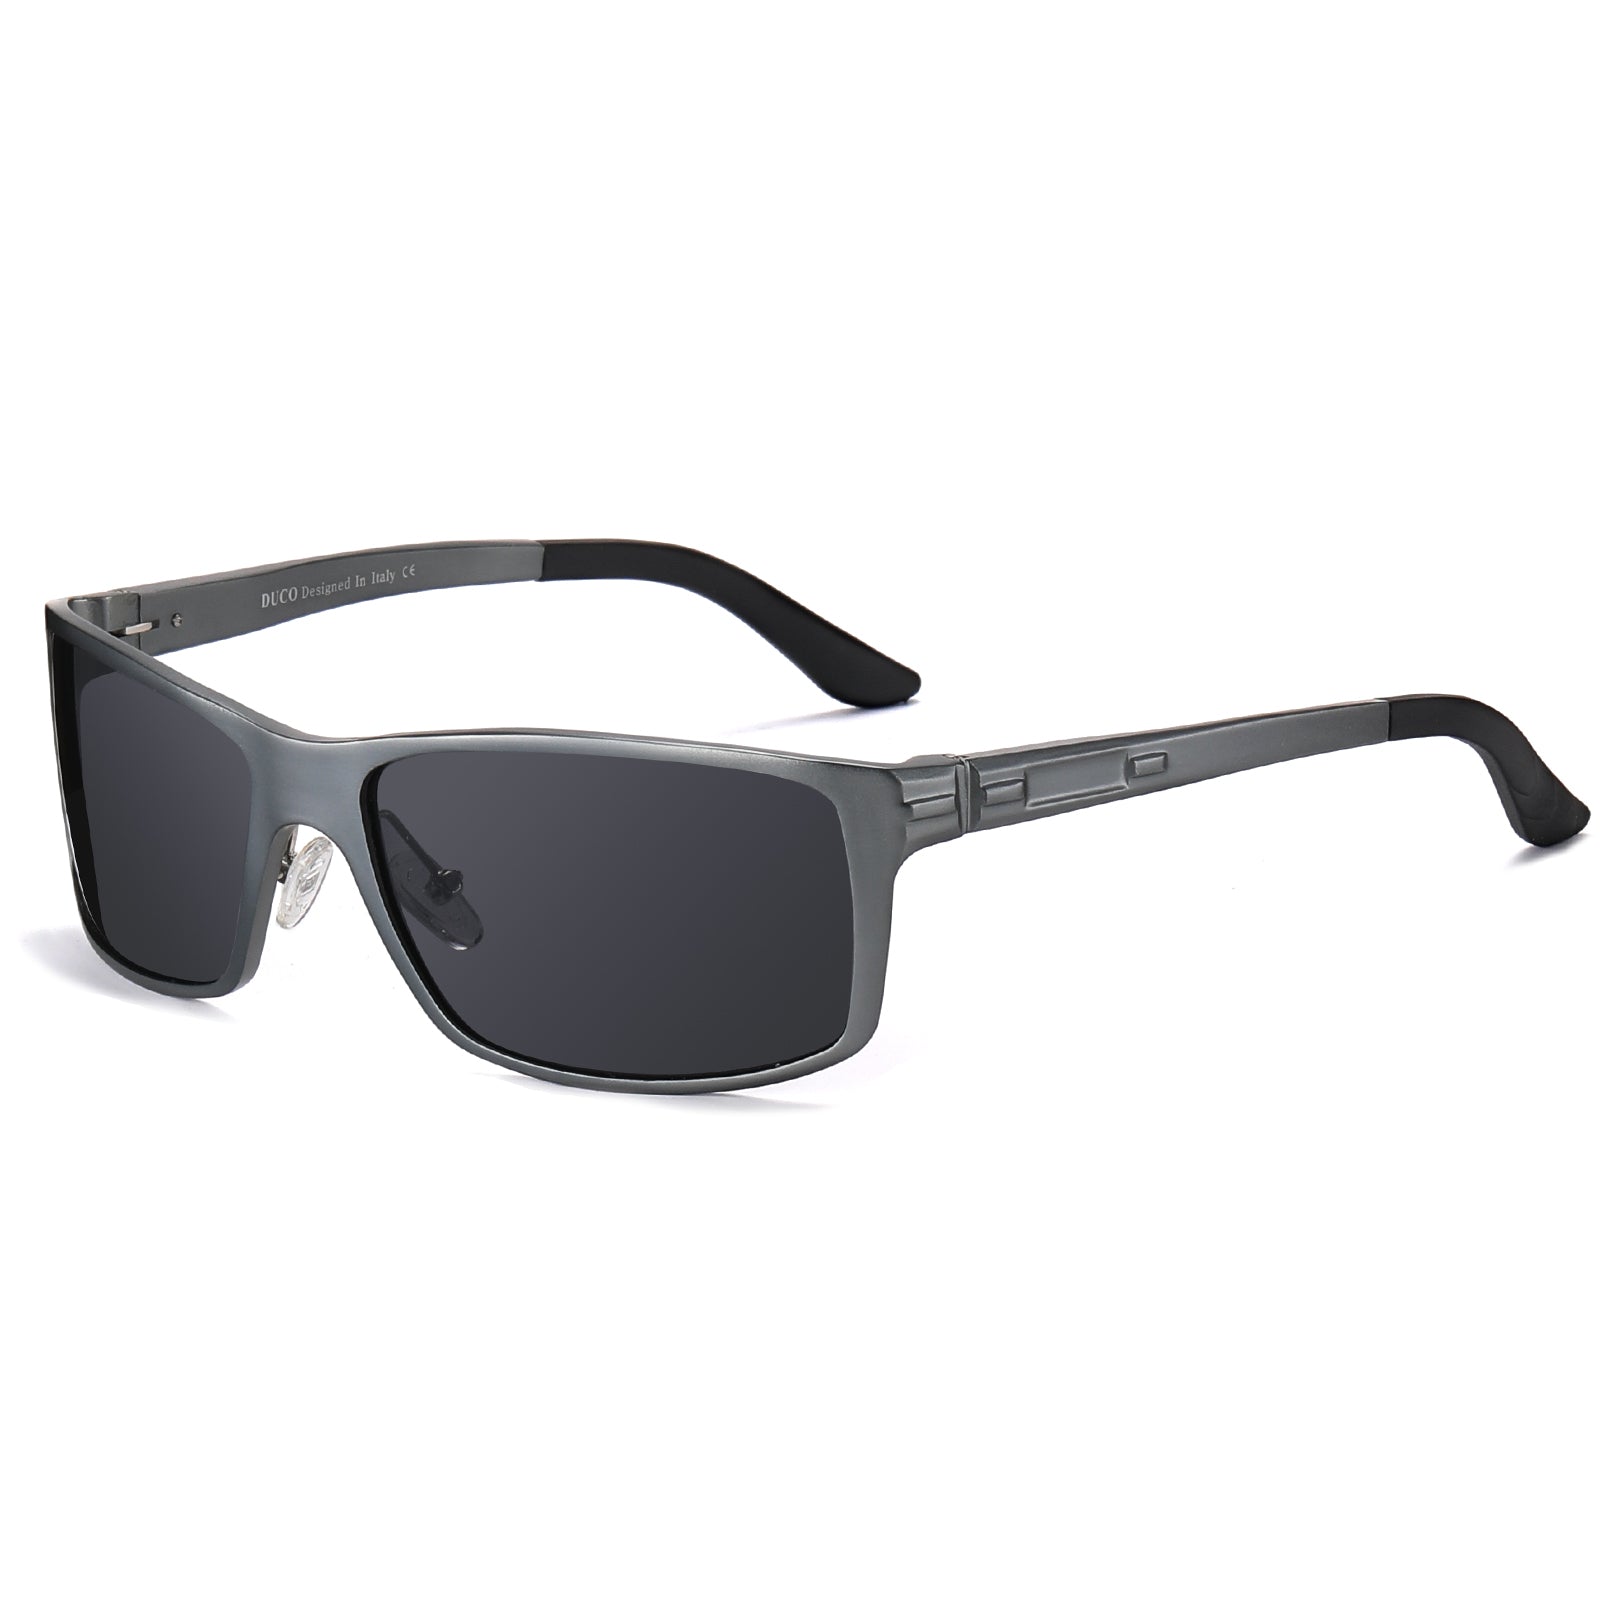 DUCO Polarized Sports Sunglasses For Men Durable Metal Frame Sun Glasses  For Driving Cycling Baseball Running Golf 9018